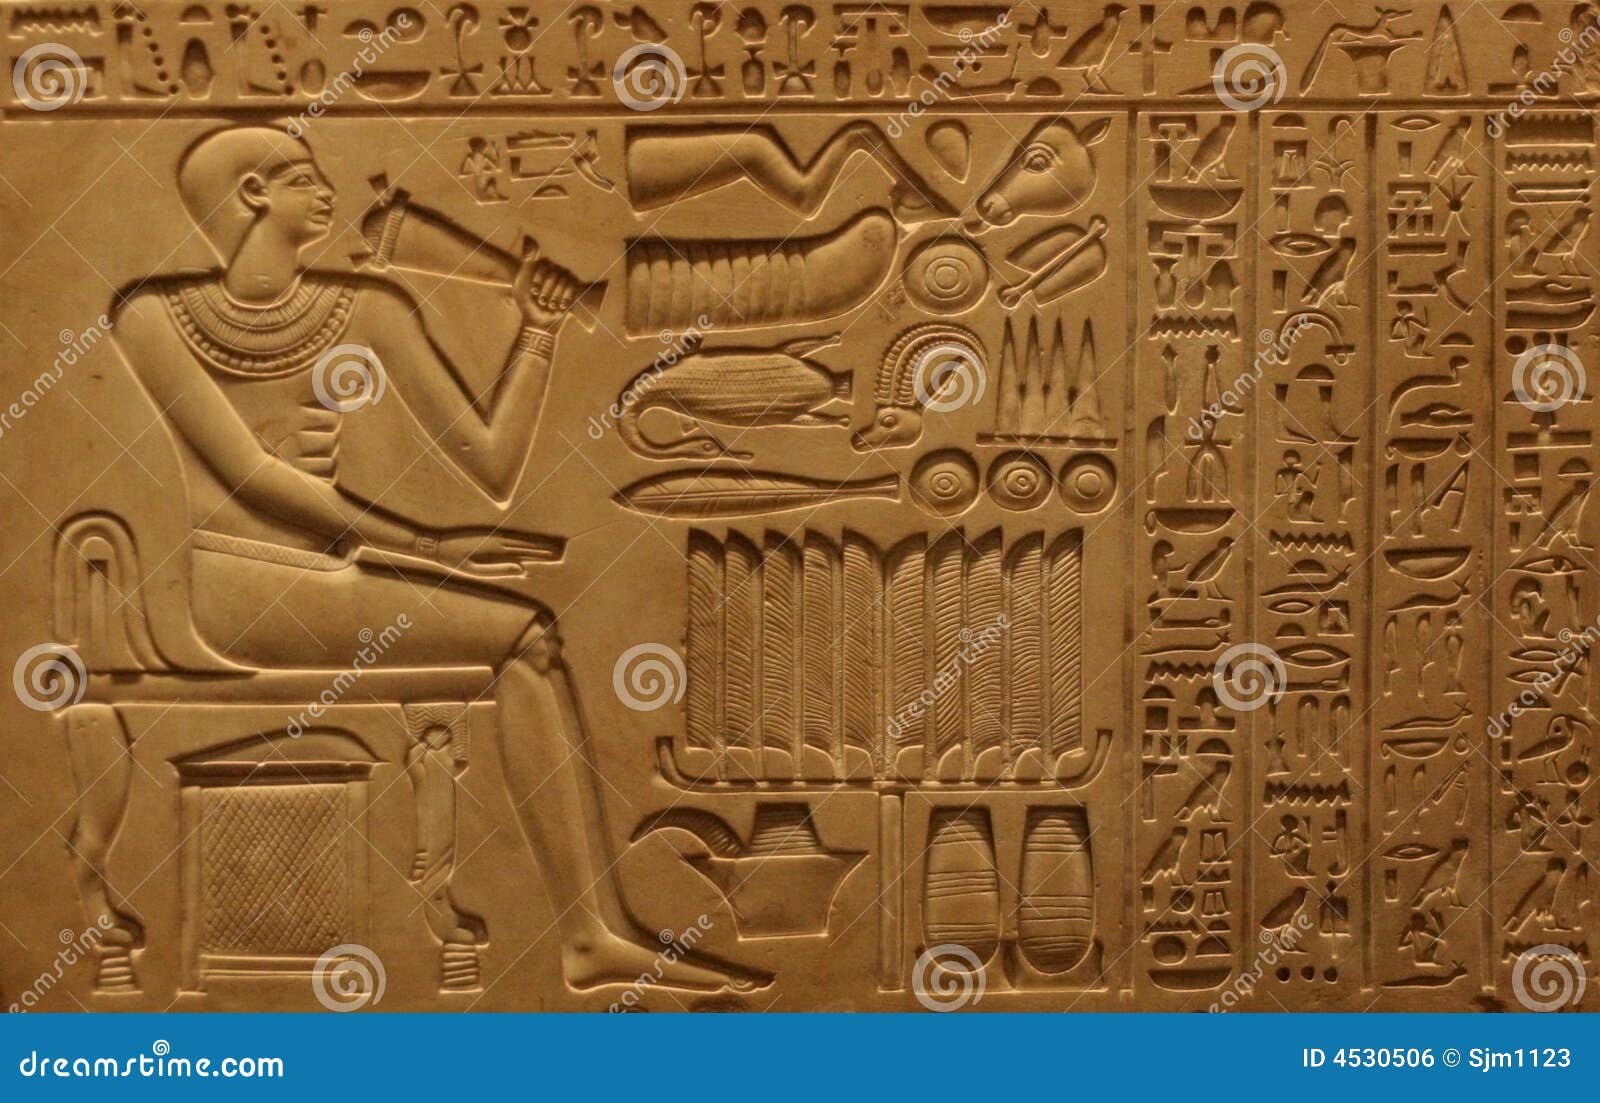 egyptian tablet